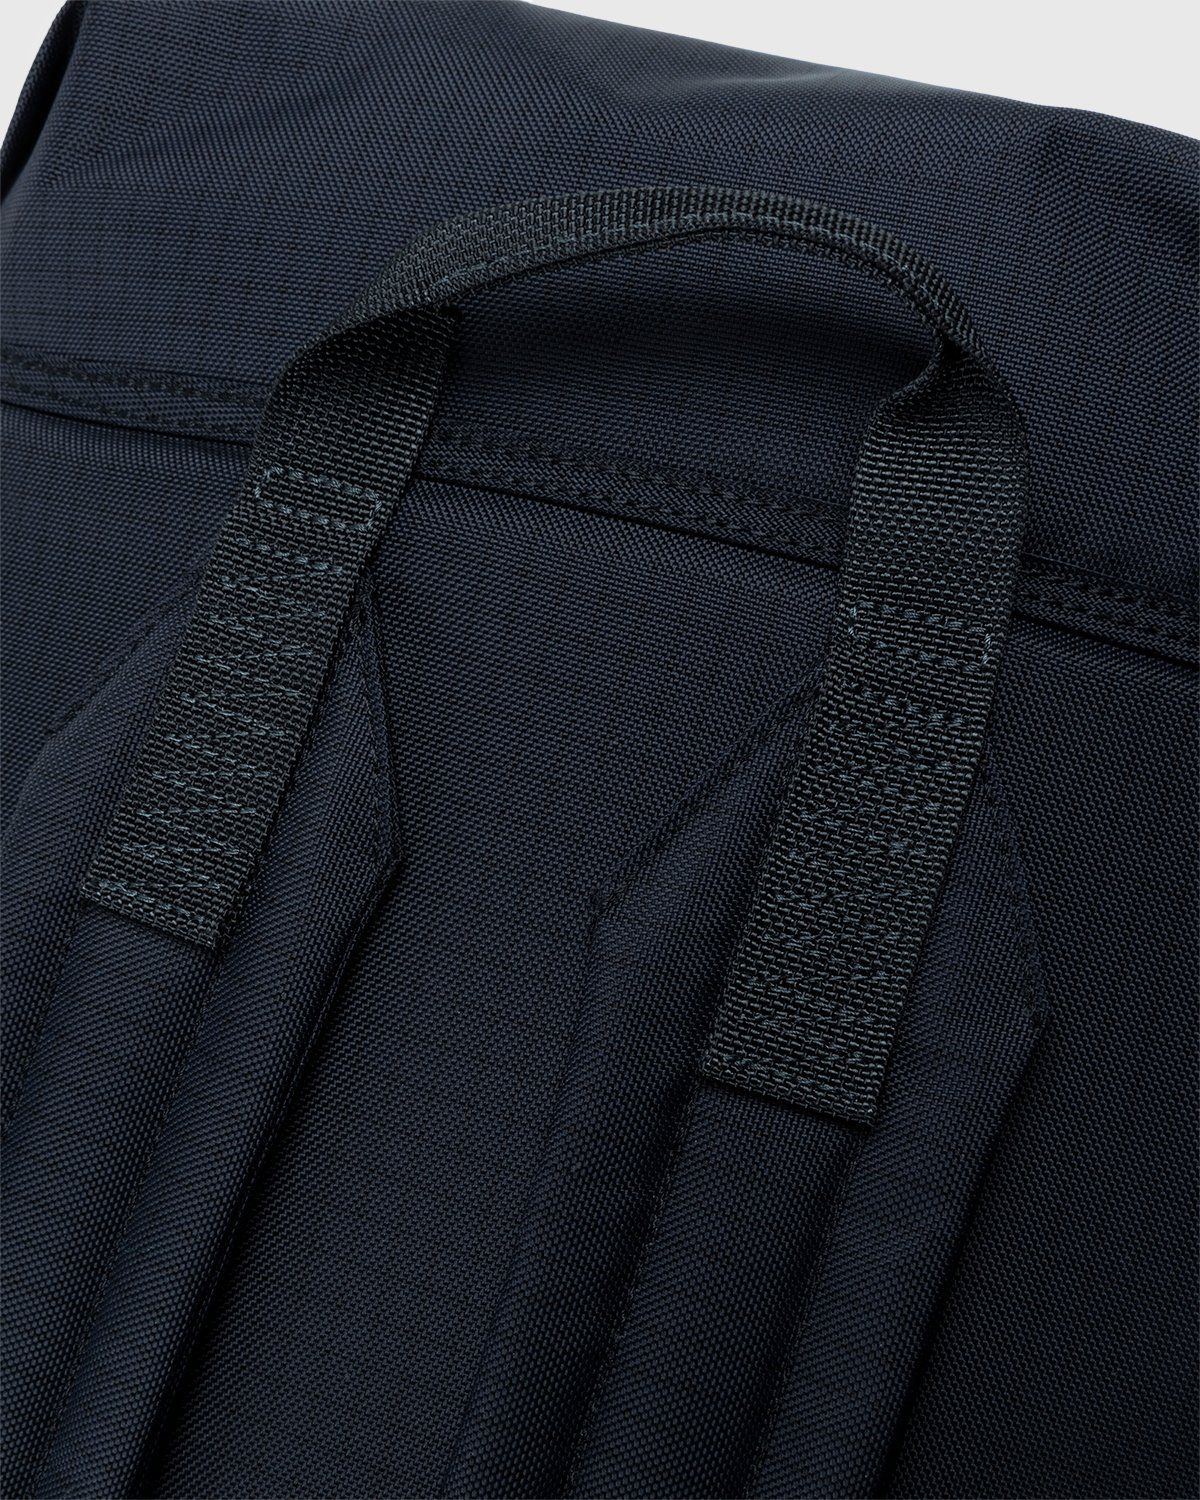 Acne Studios – Large Ripstop Backpack Black - Bags - Black - Image 6